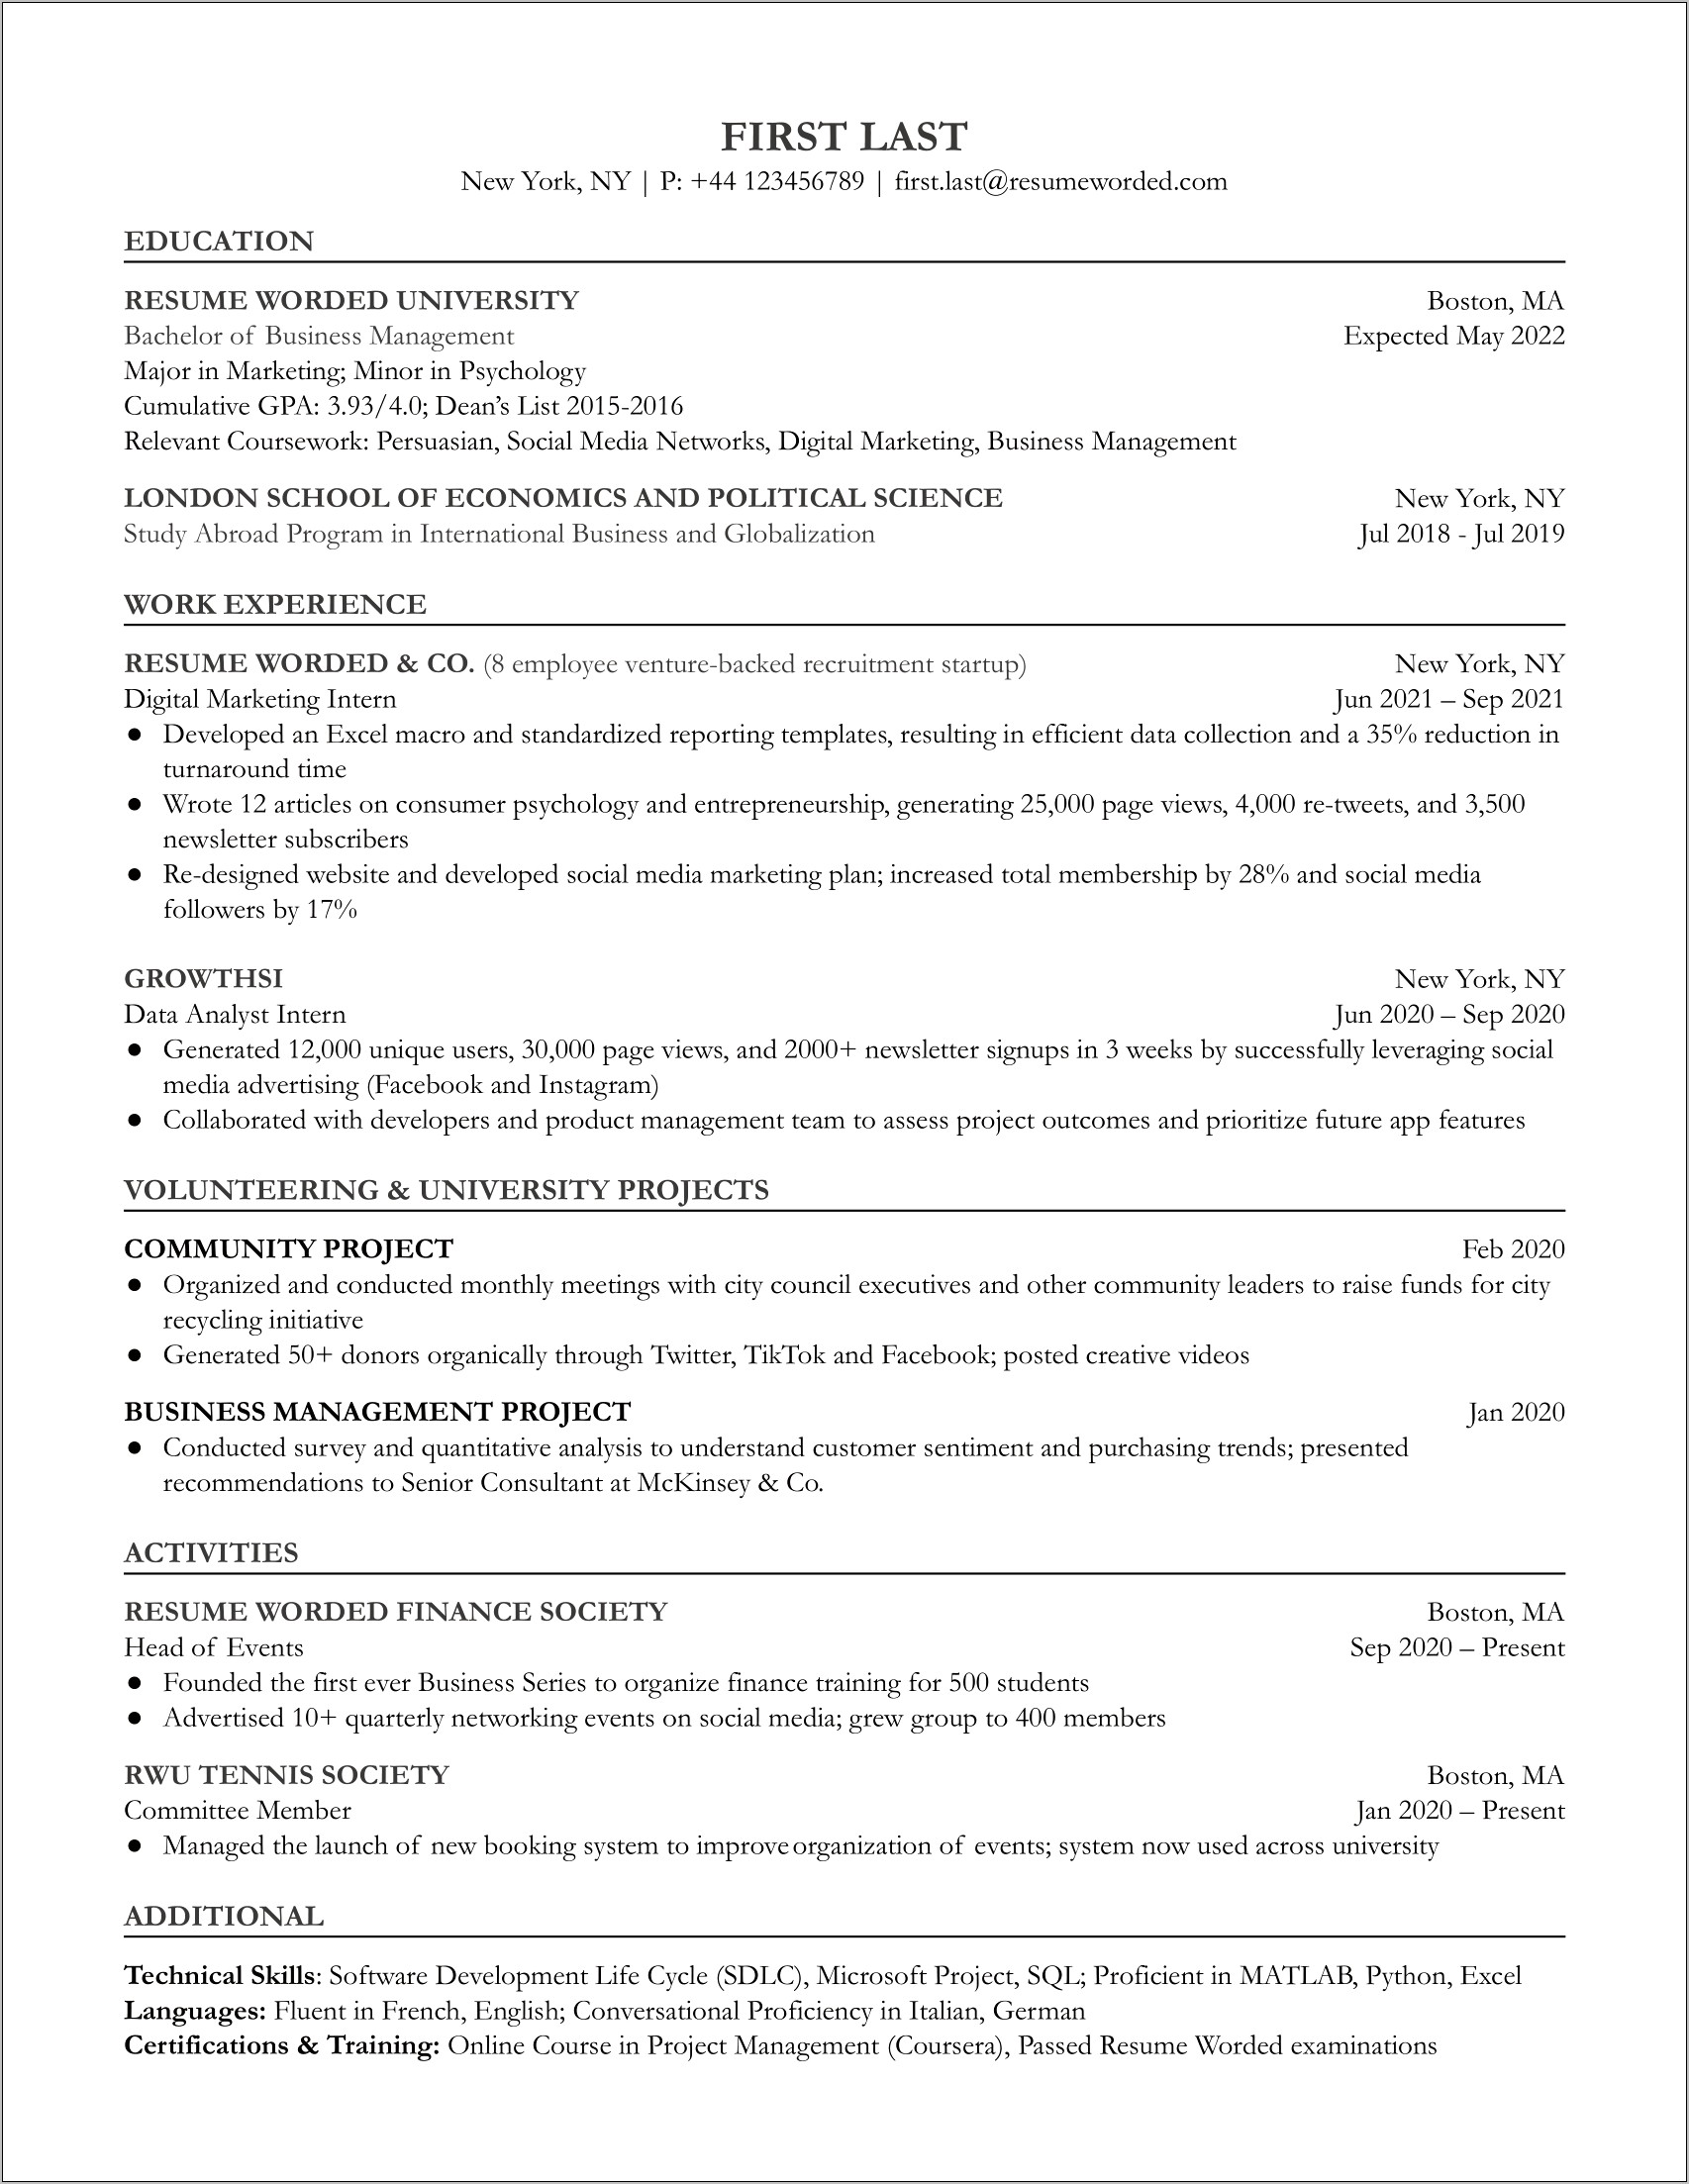 Resume Summary Samples For Marketing